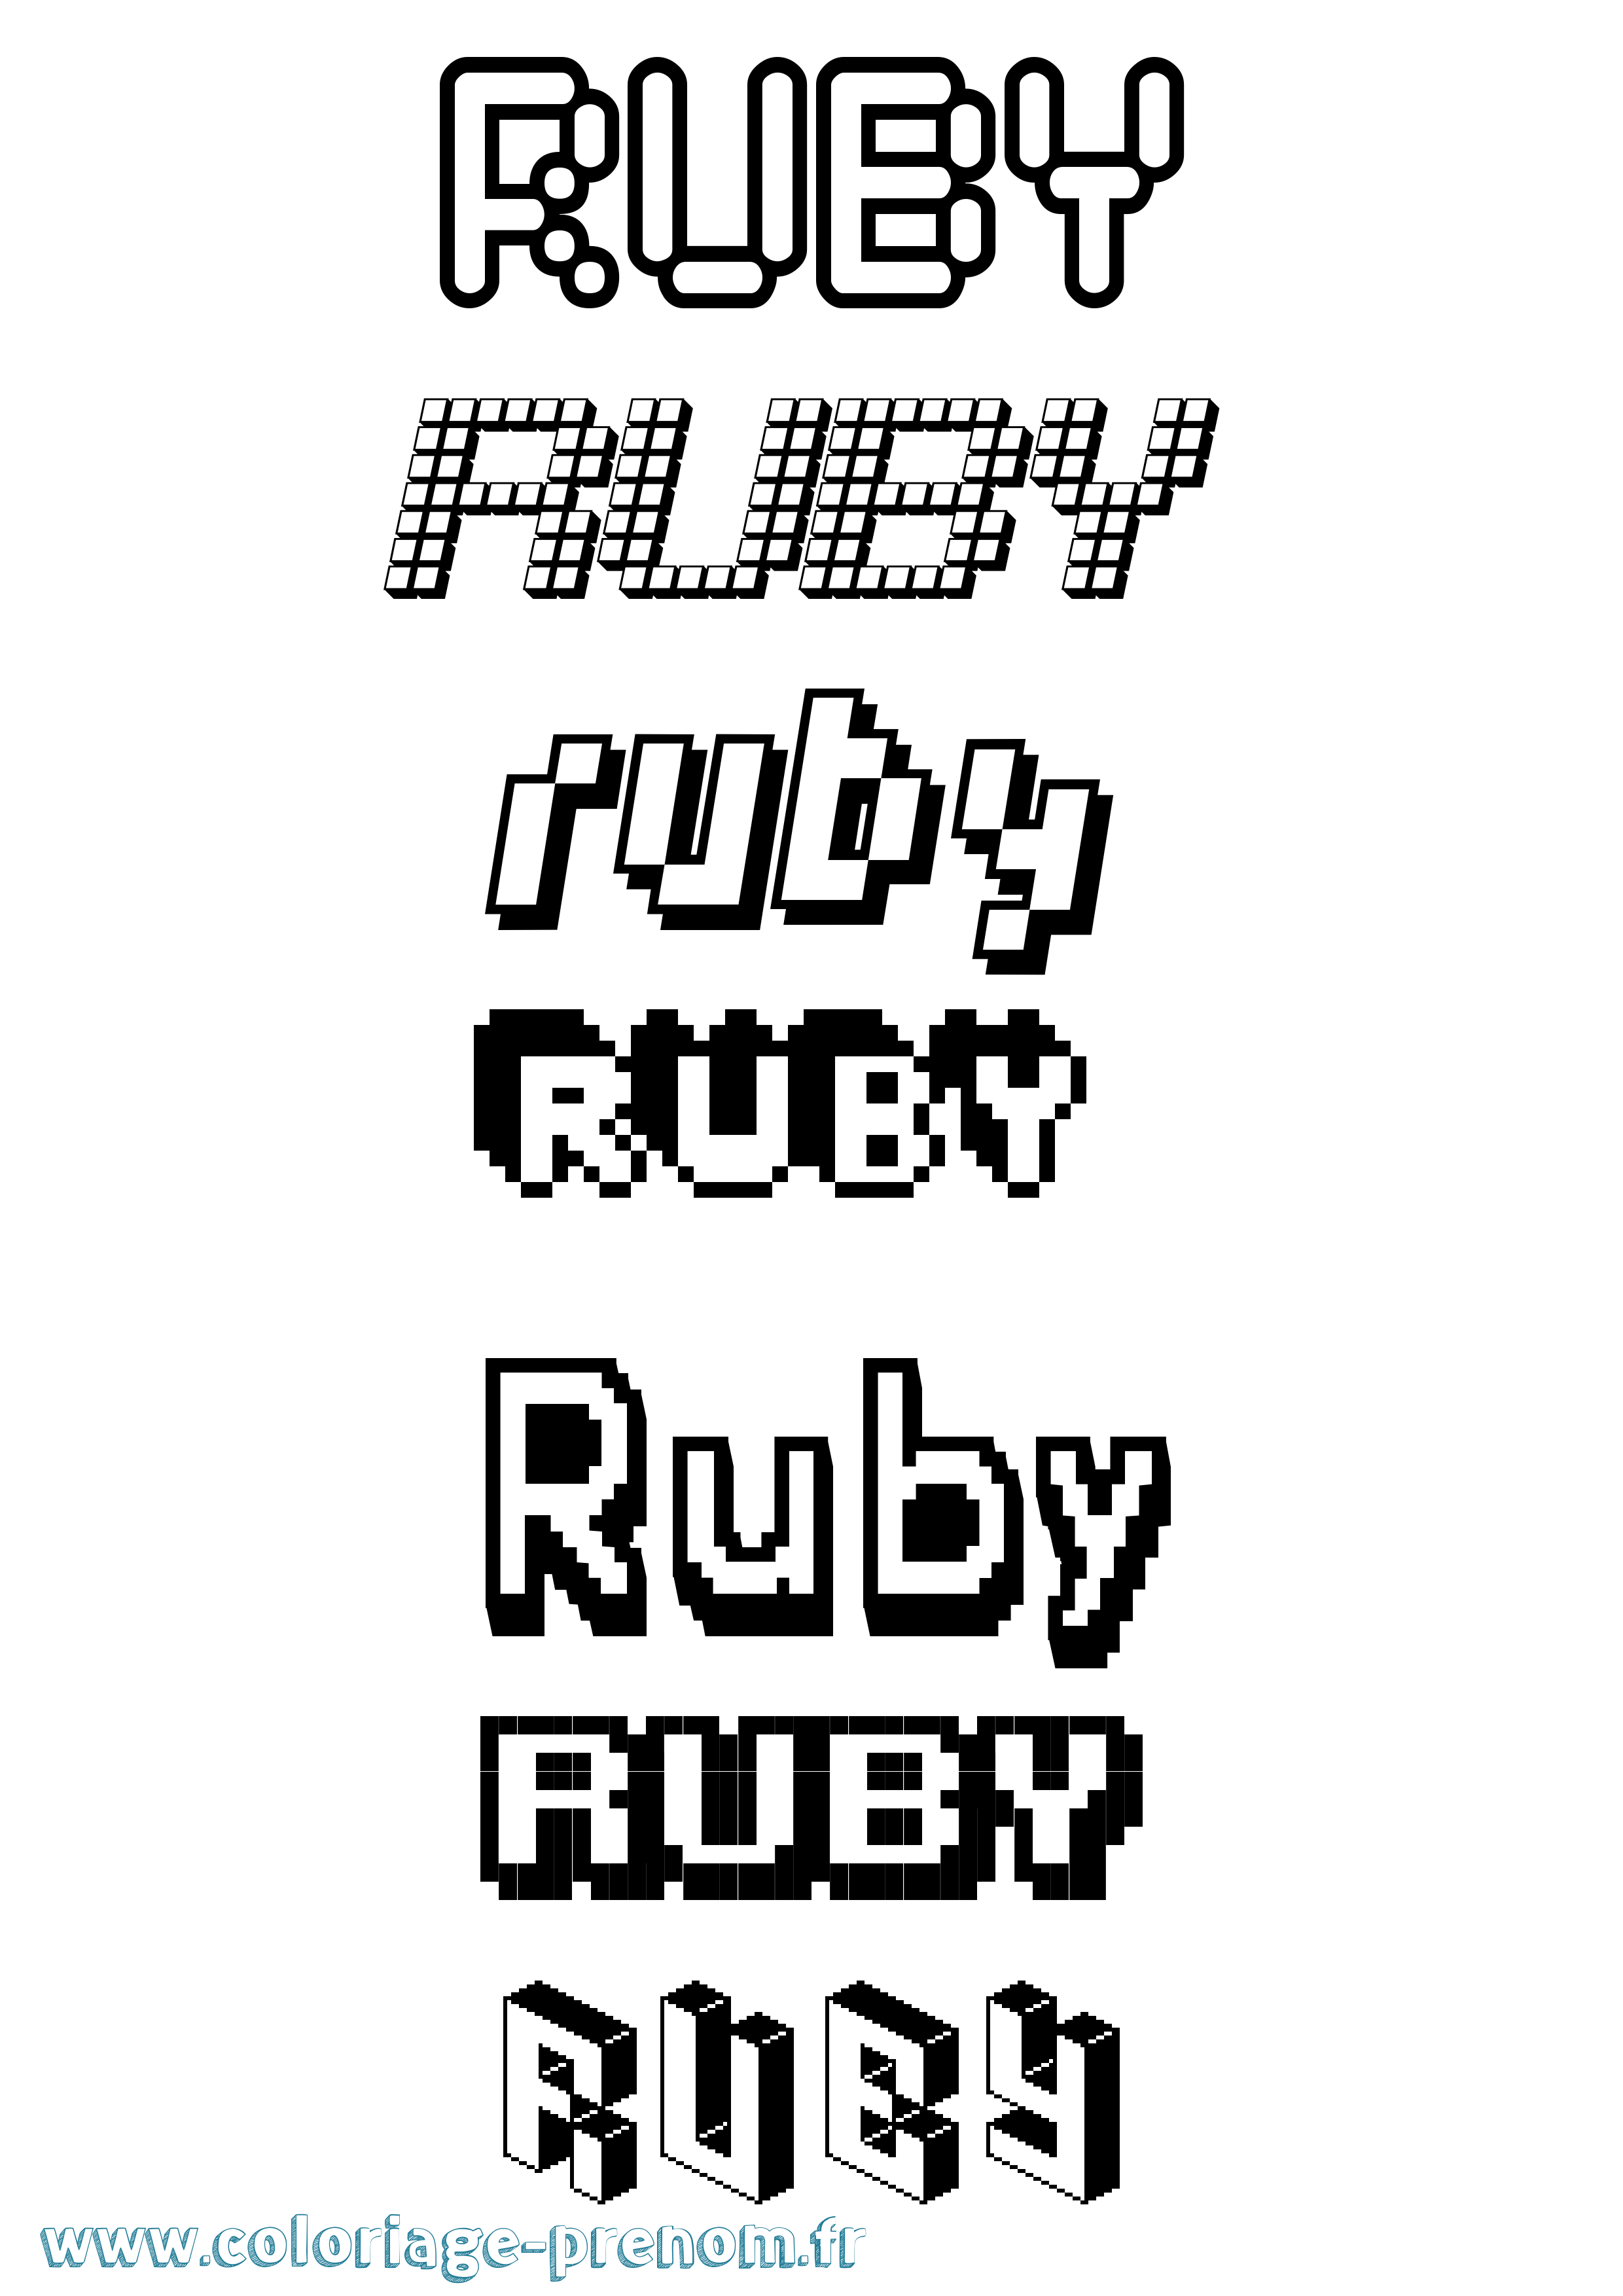 Coloriage prénom Ruby Pixel